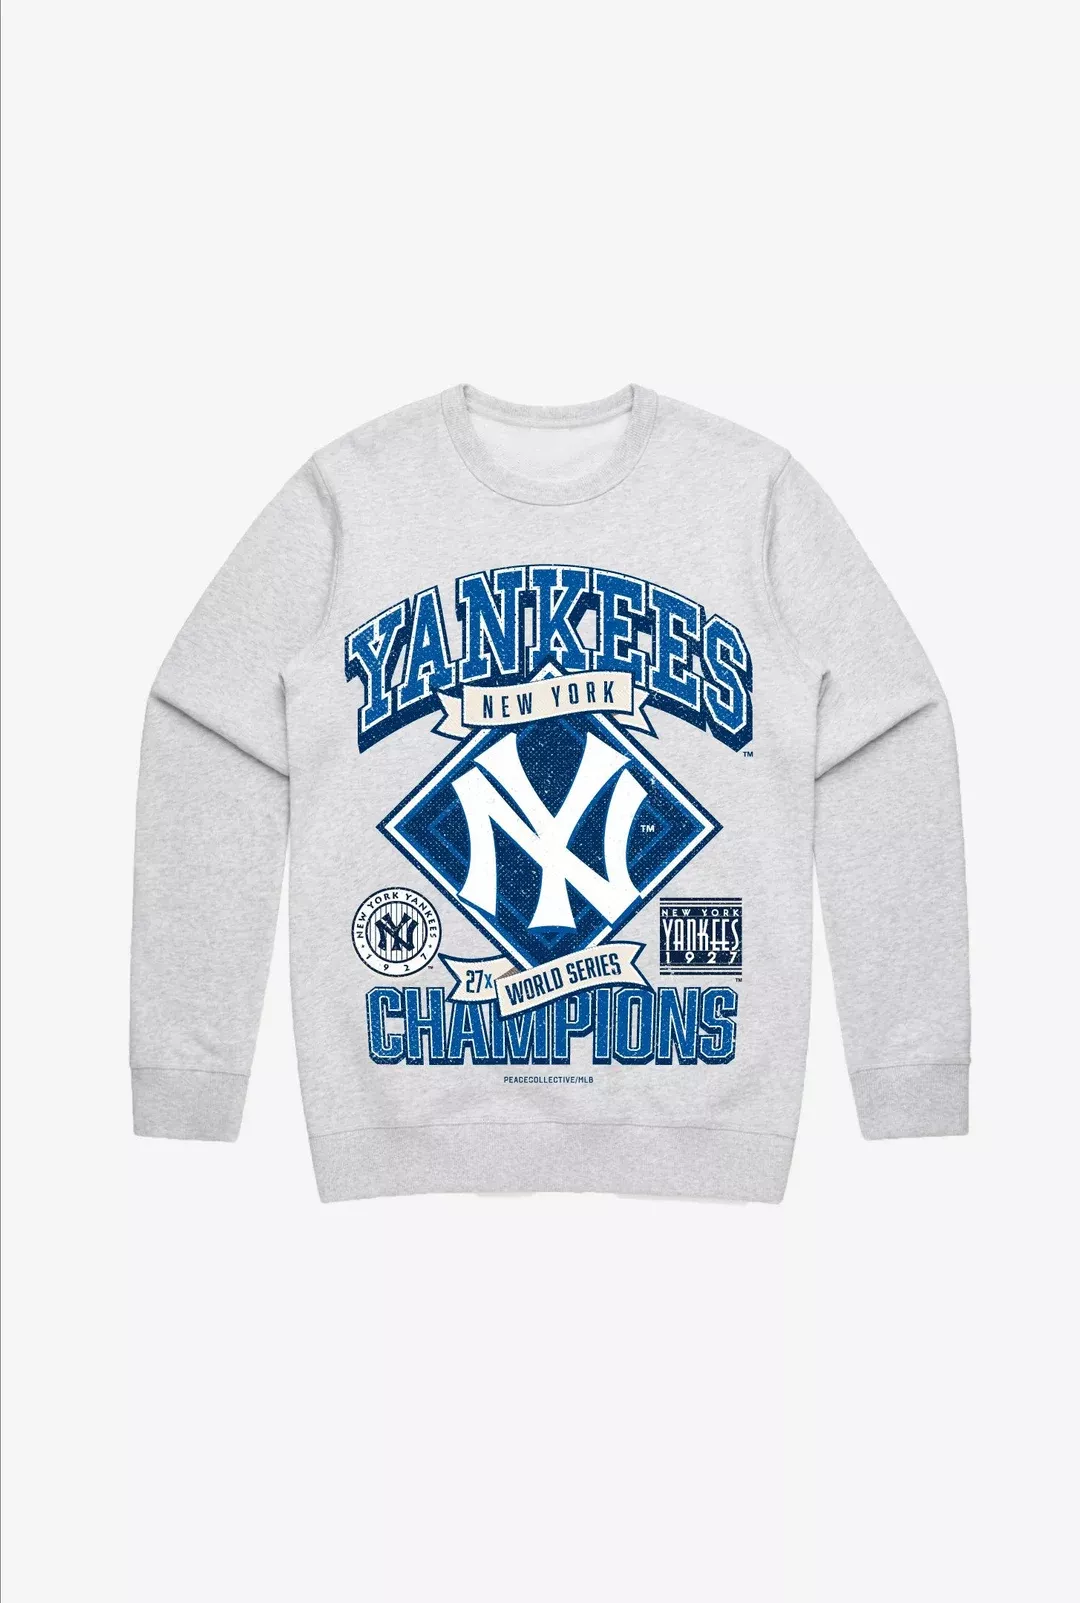 New York Baseball Sweatshirt curated on LTK